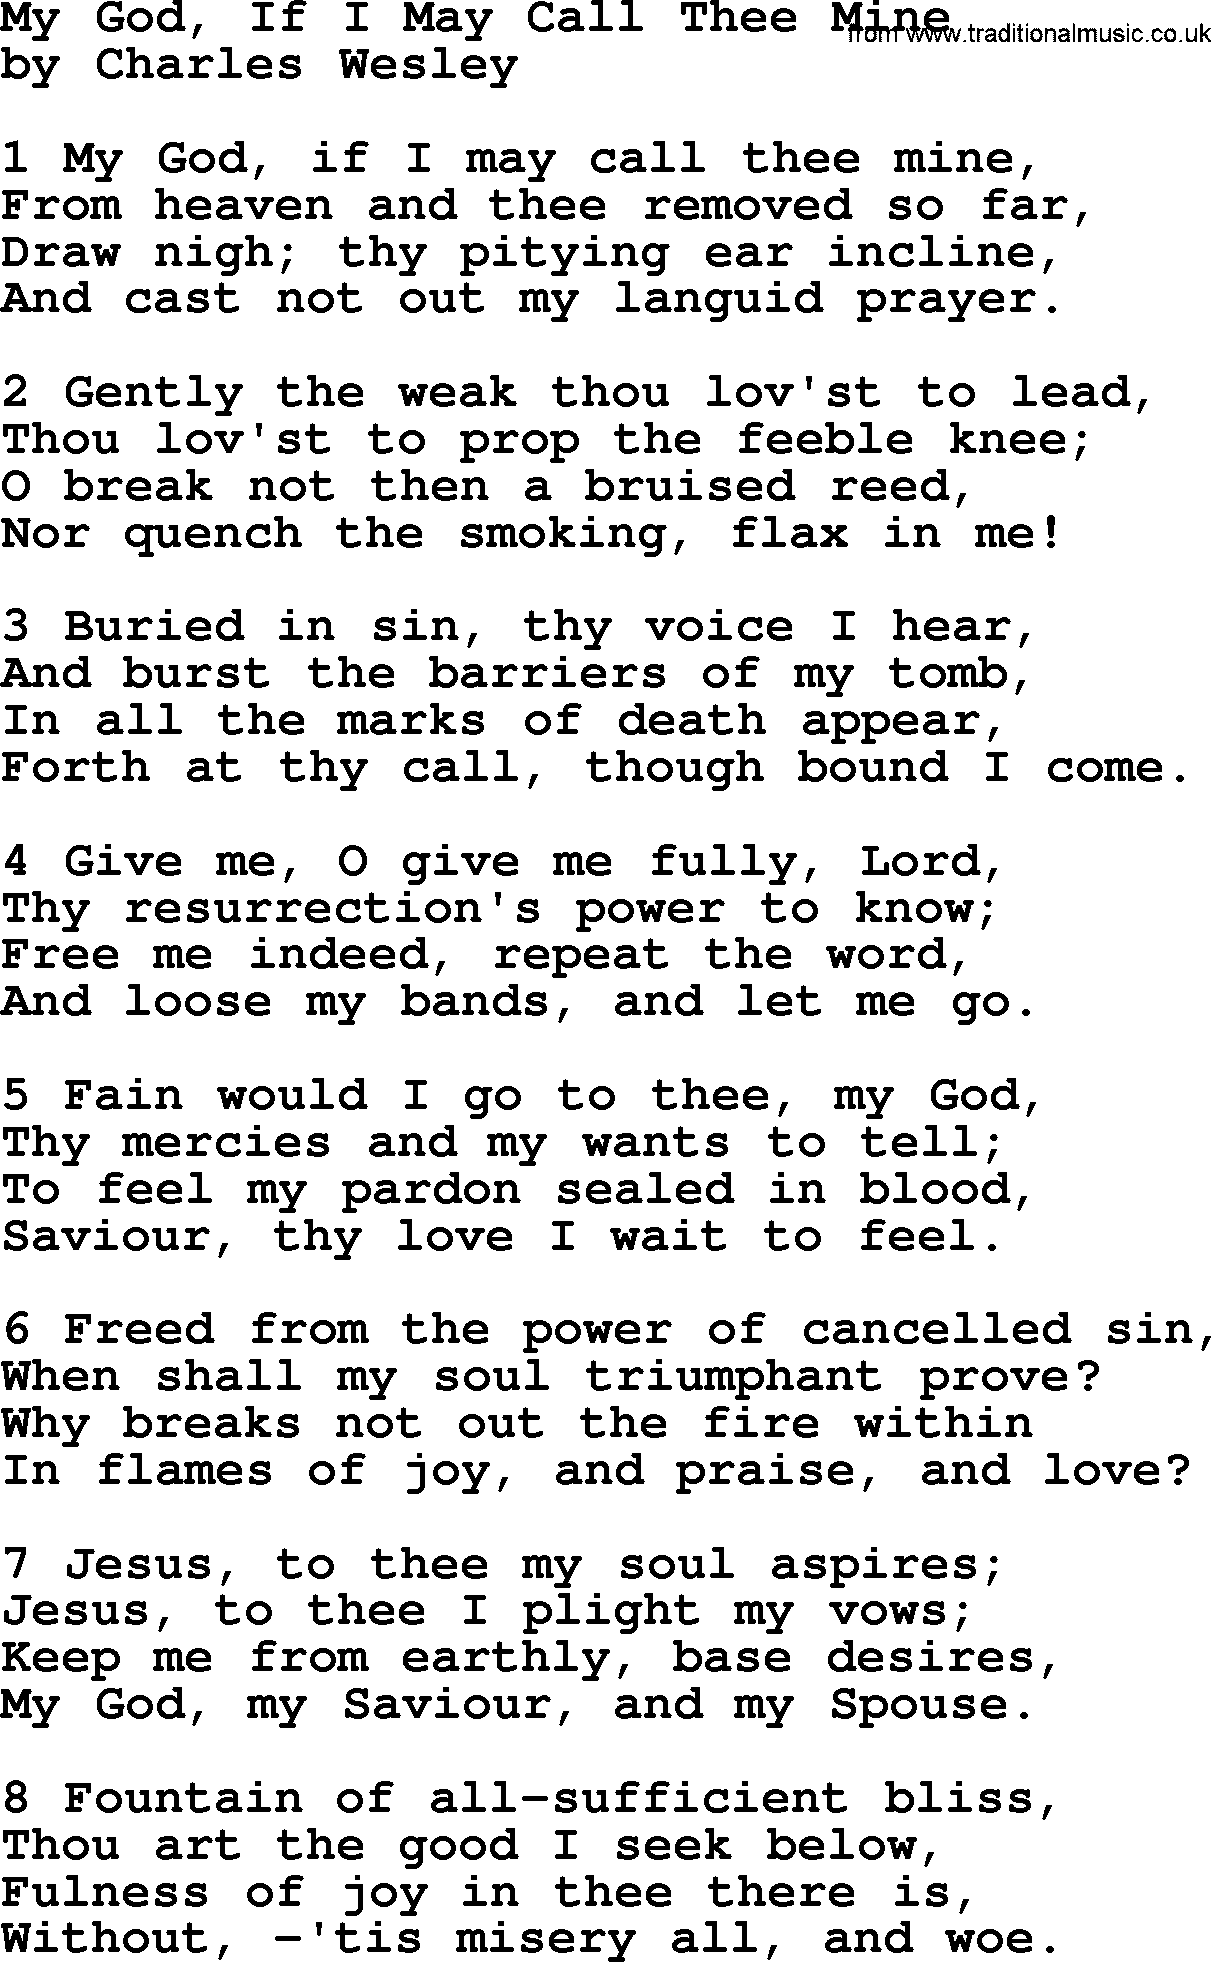 Charles Wesley hymn: My God, If I May Call Thee Mine, lyrics